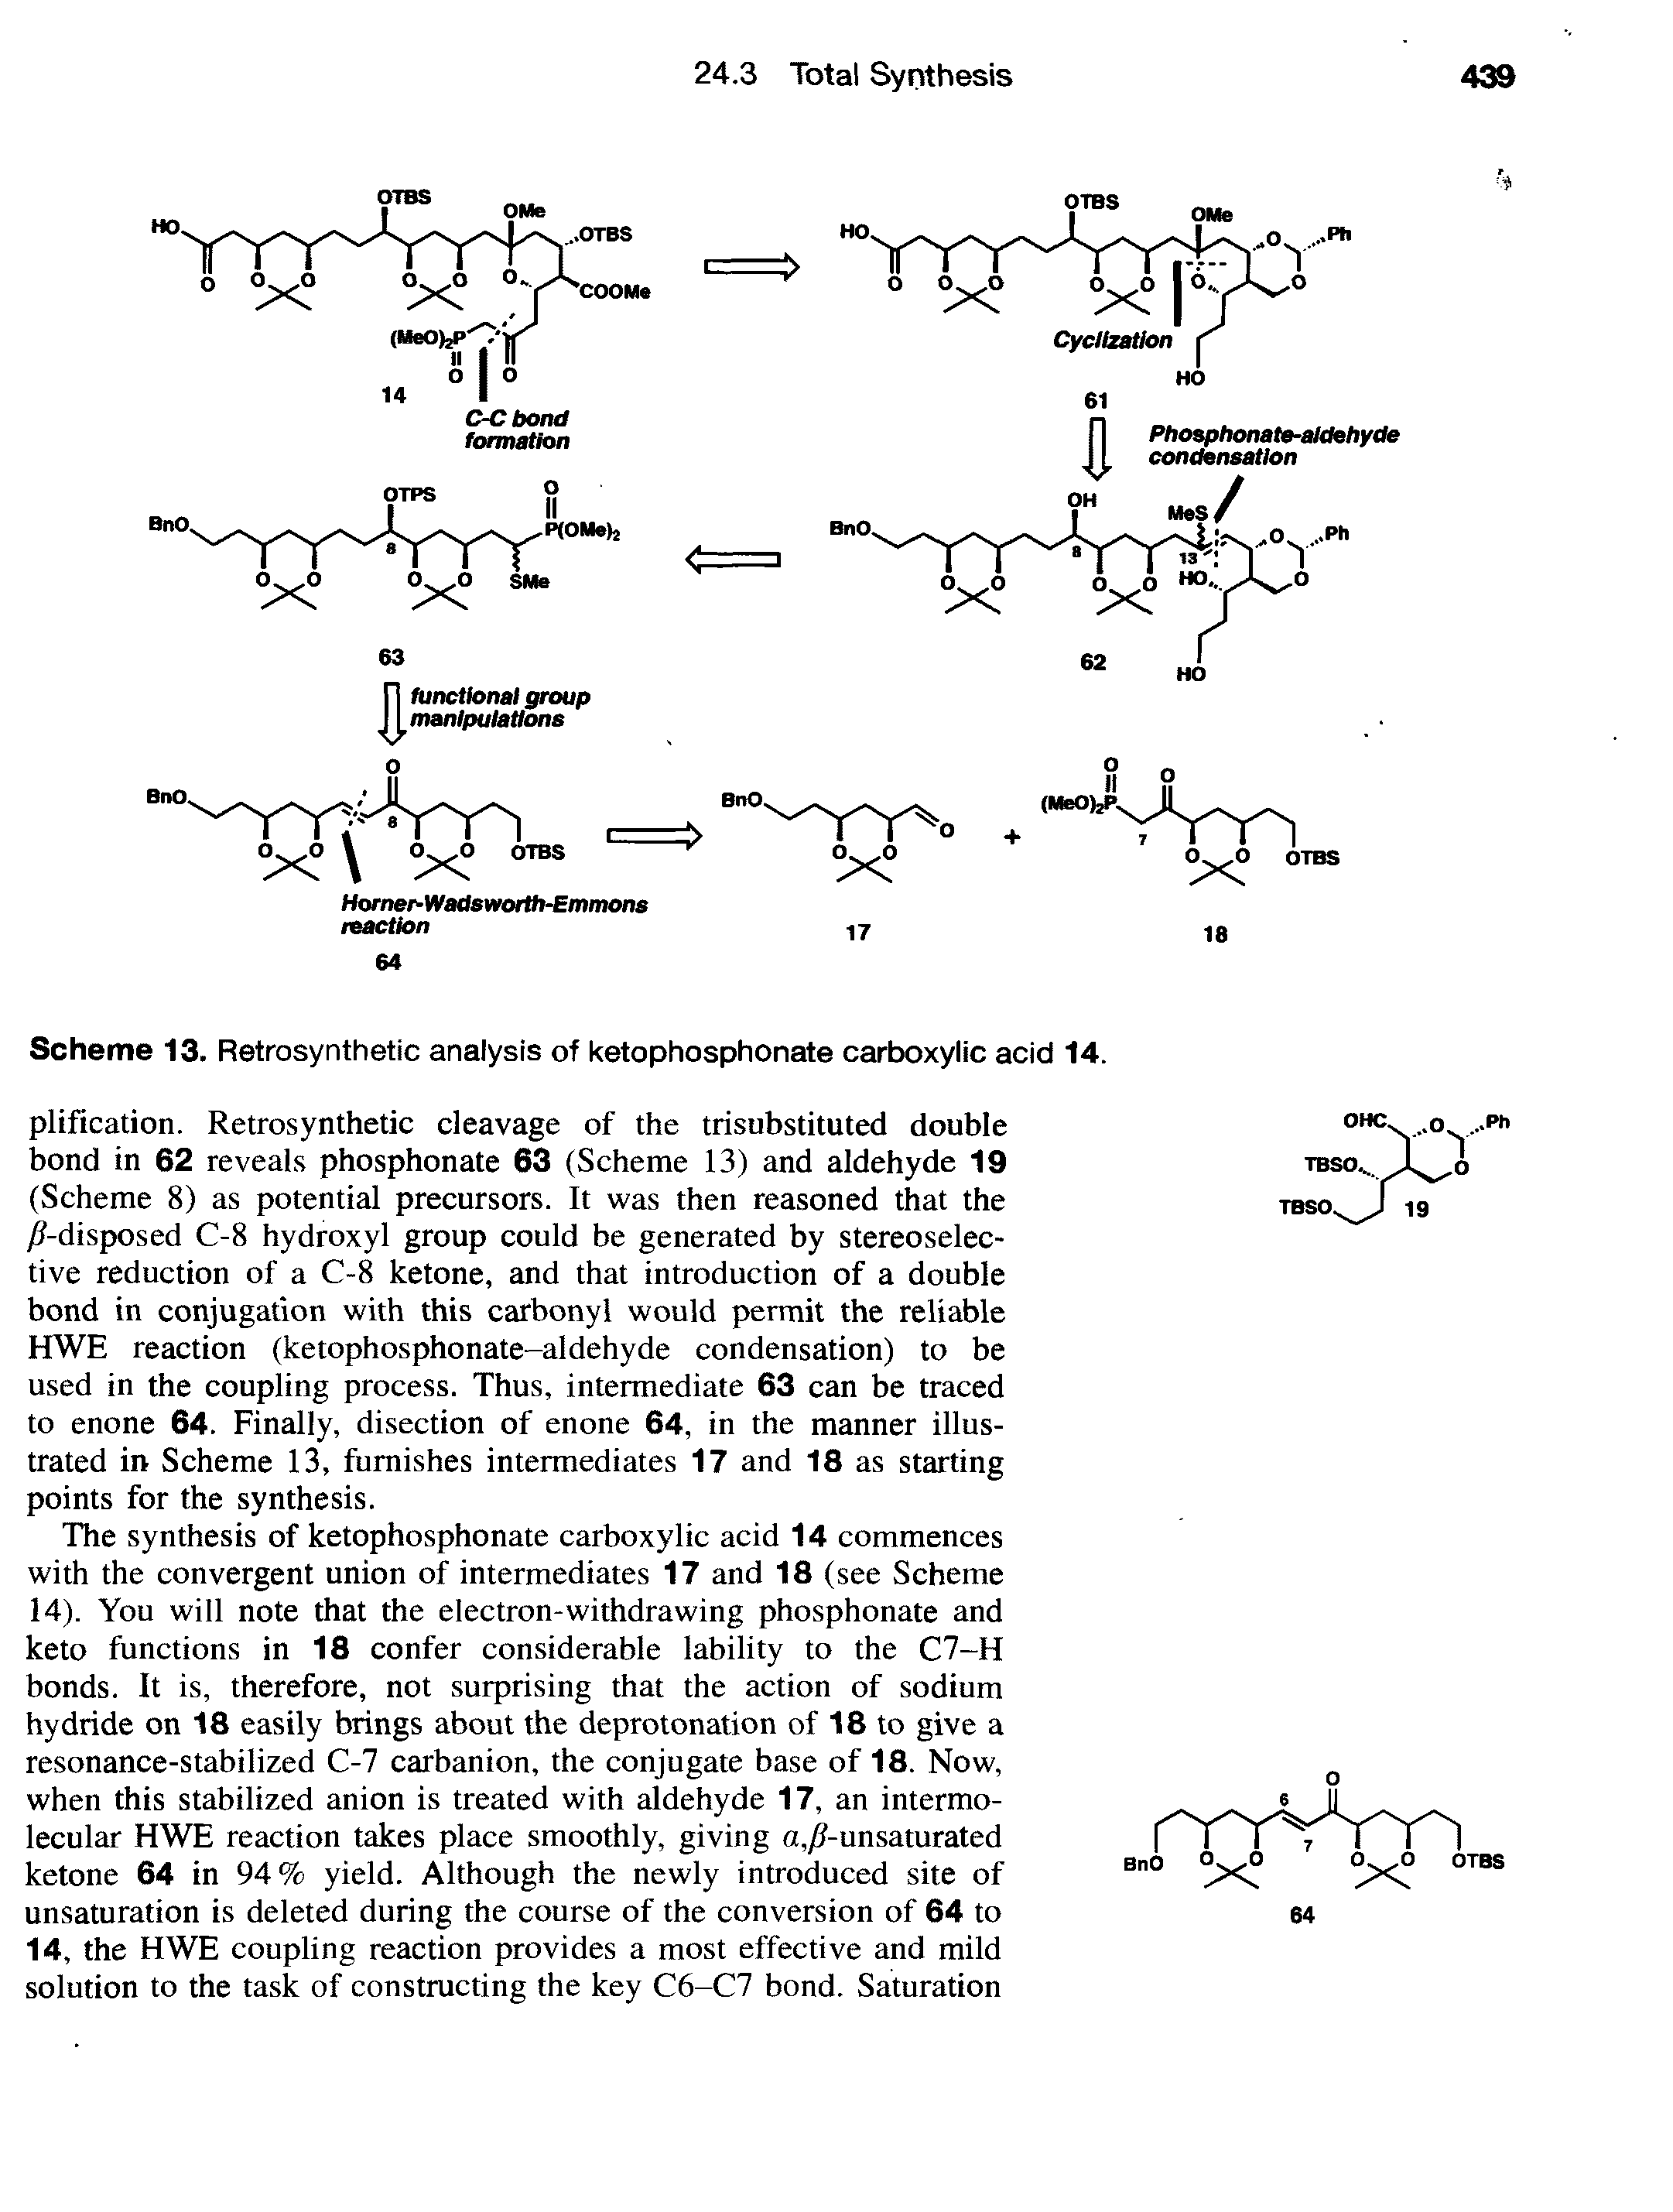 Scheme 13. Retrosynthetic analysis of ketophosphonate carboxylic acid 14.